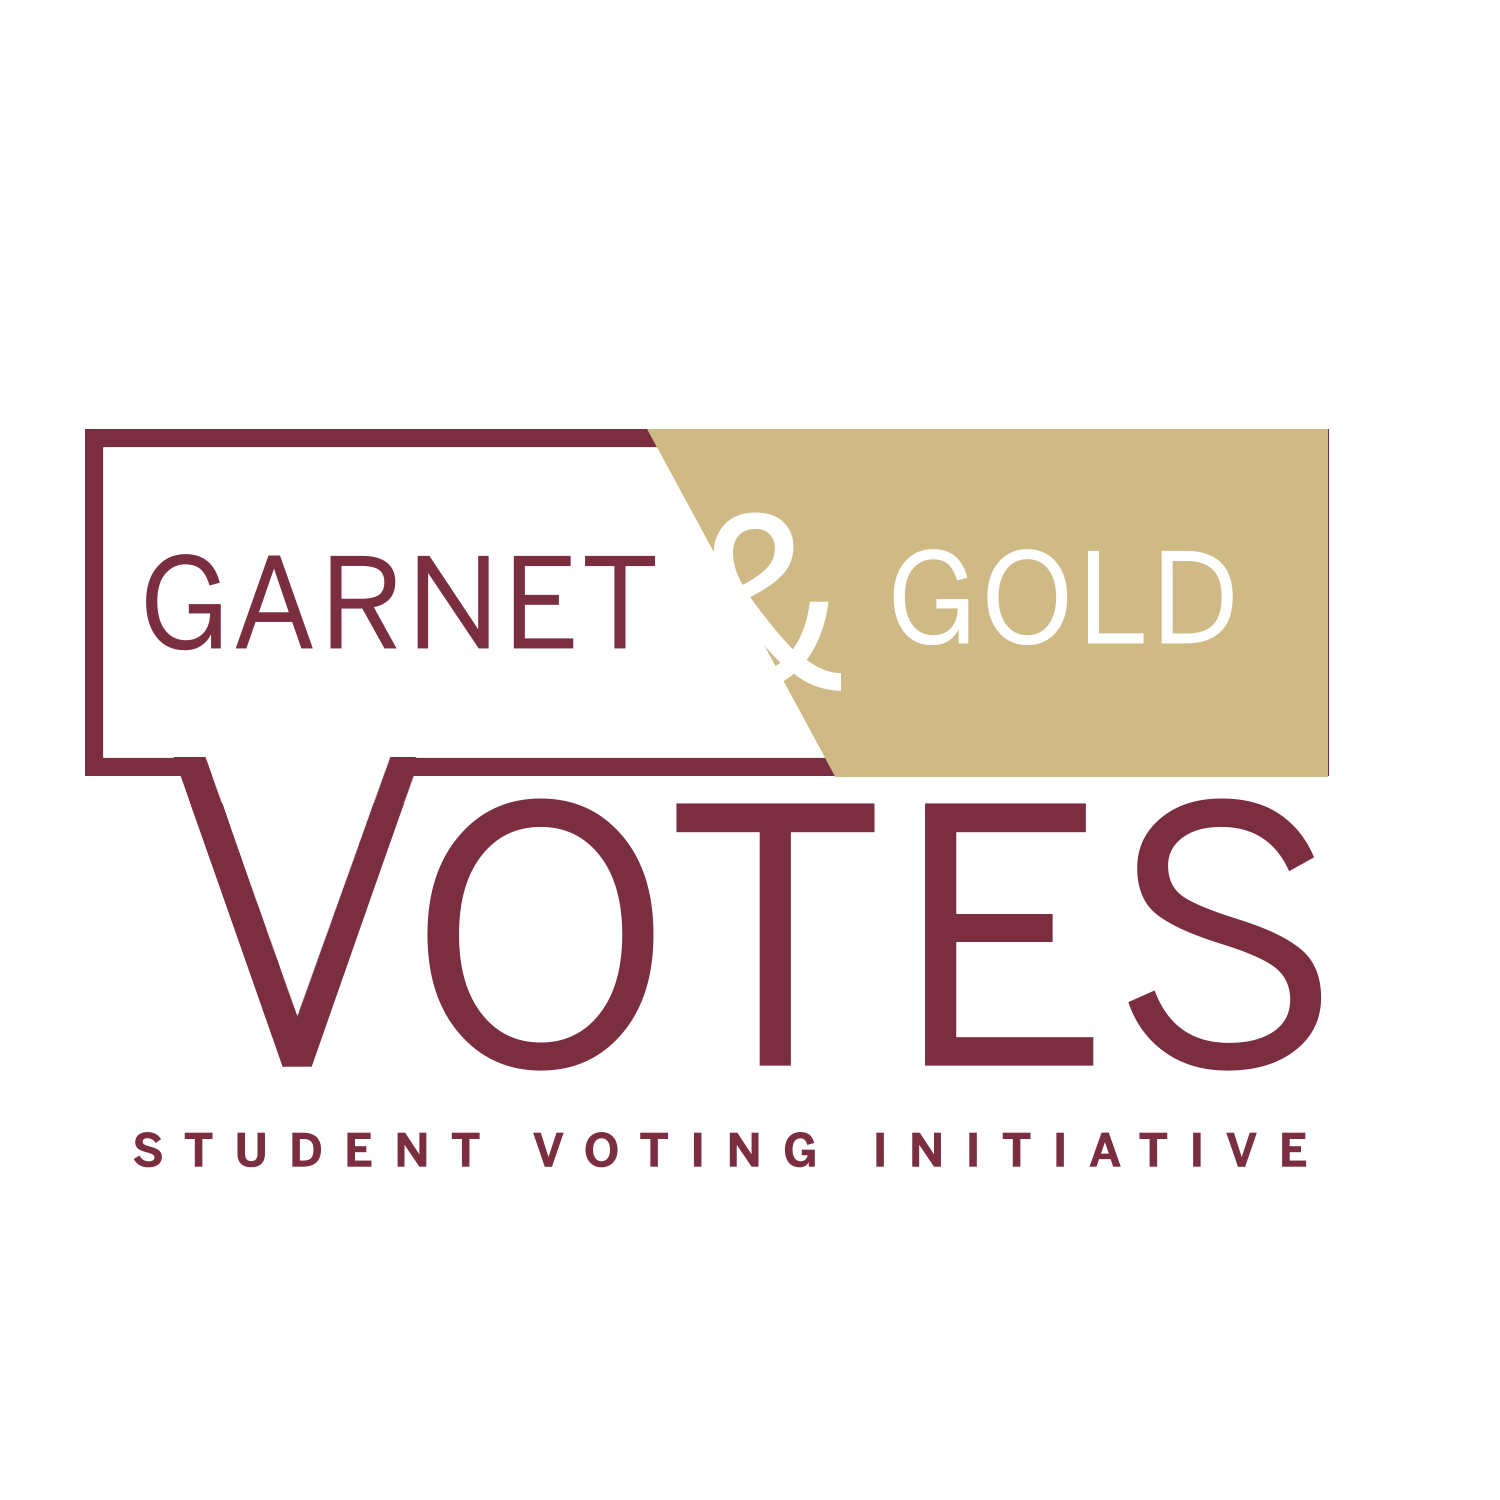 garnet & gold votes in gold